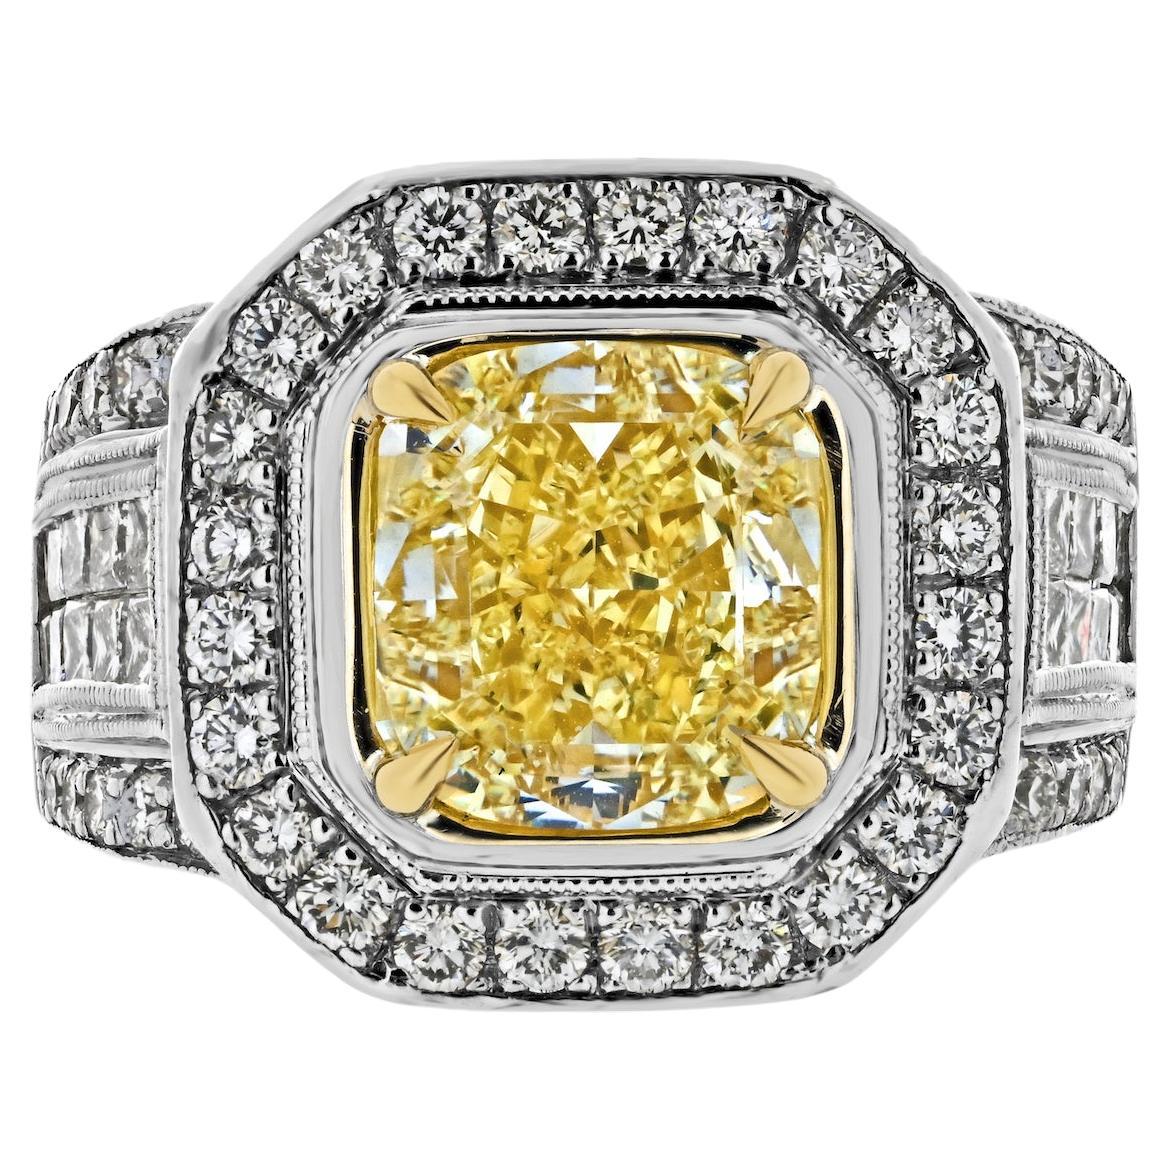 3.20ct Fancy Yellow Intense Cushion Cut Diamond Engagement Ring